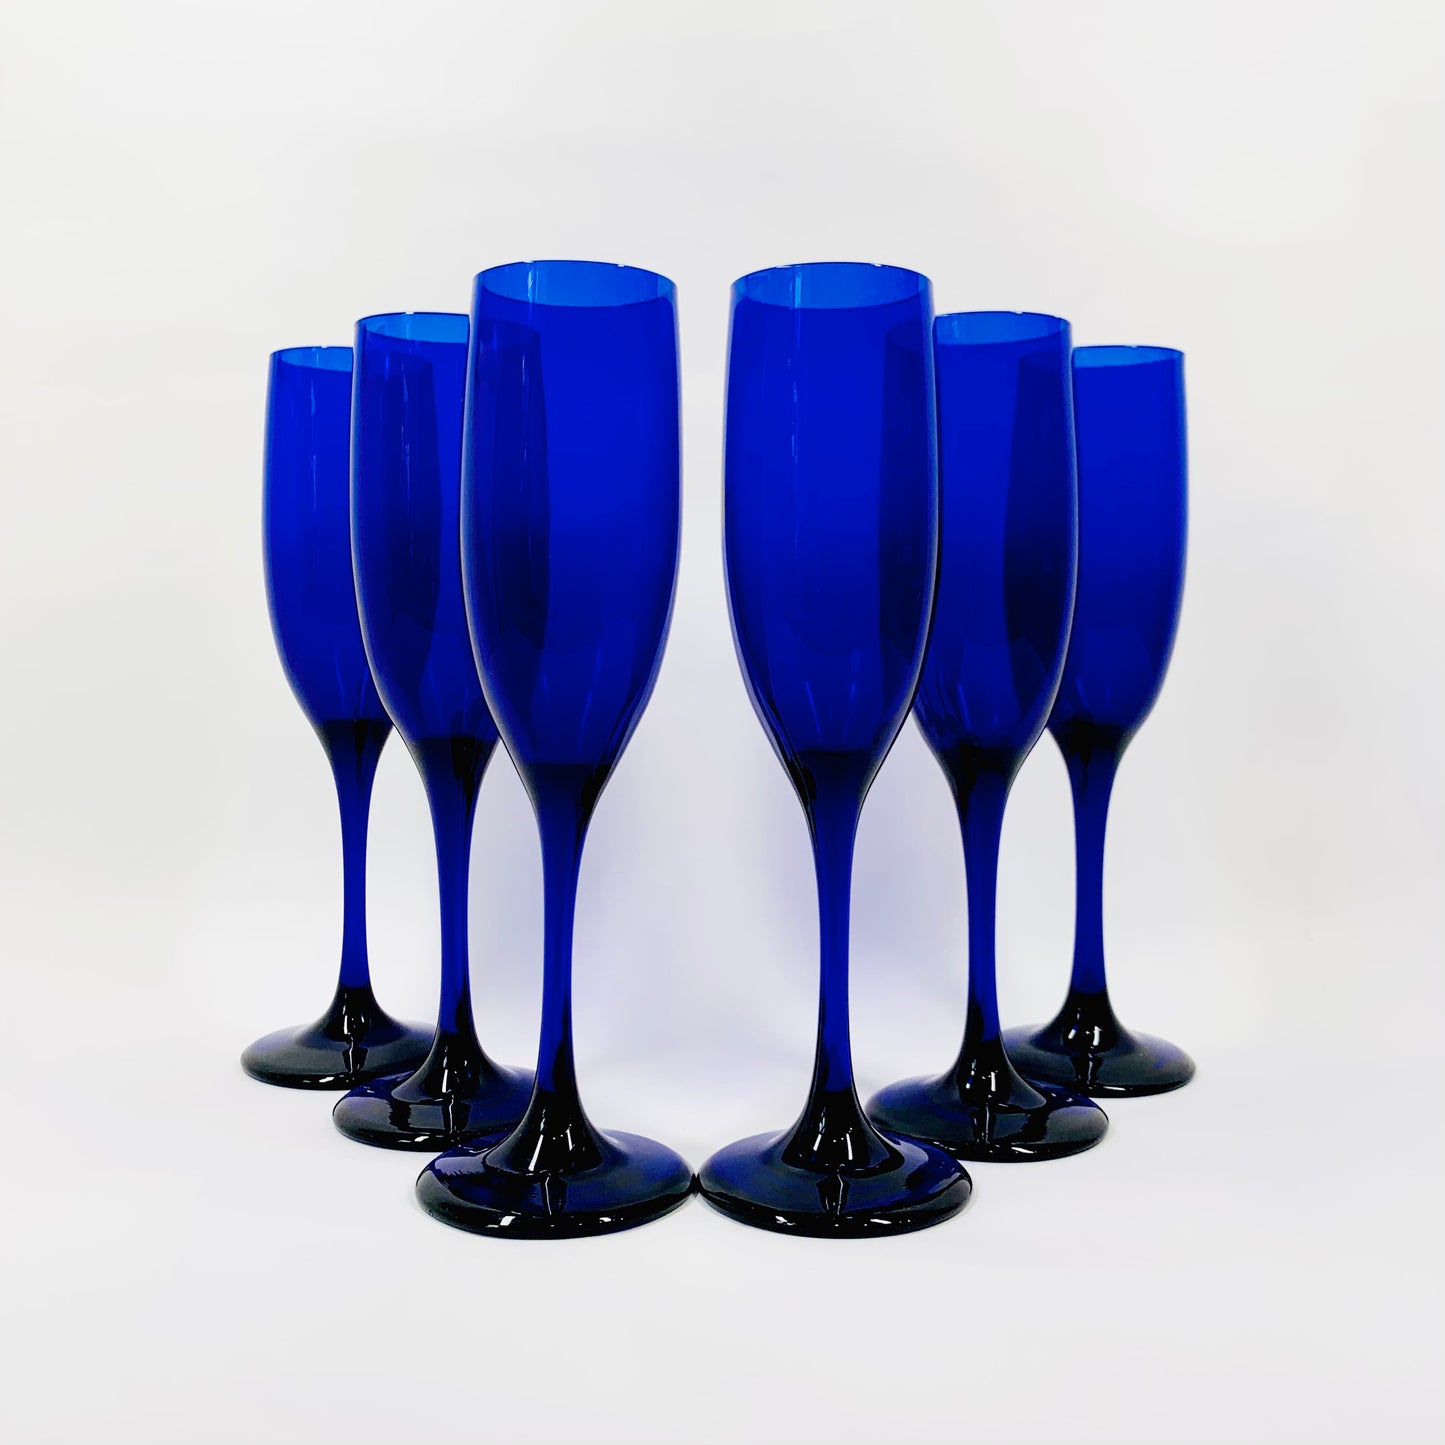 Vintage Libbey cobalt blue glass champagne flutes